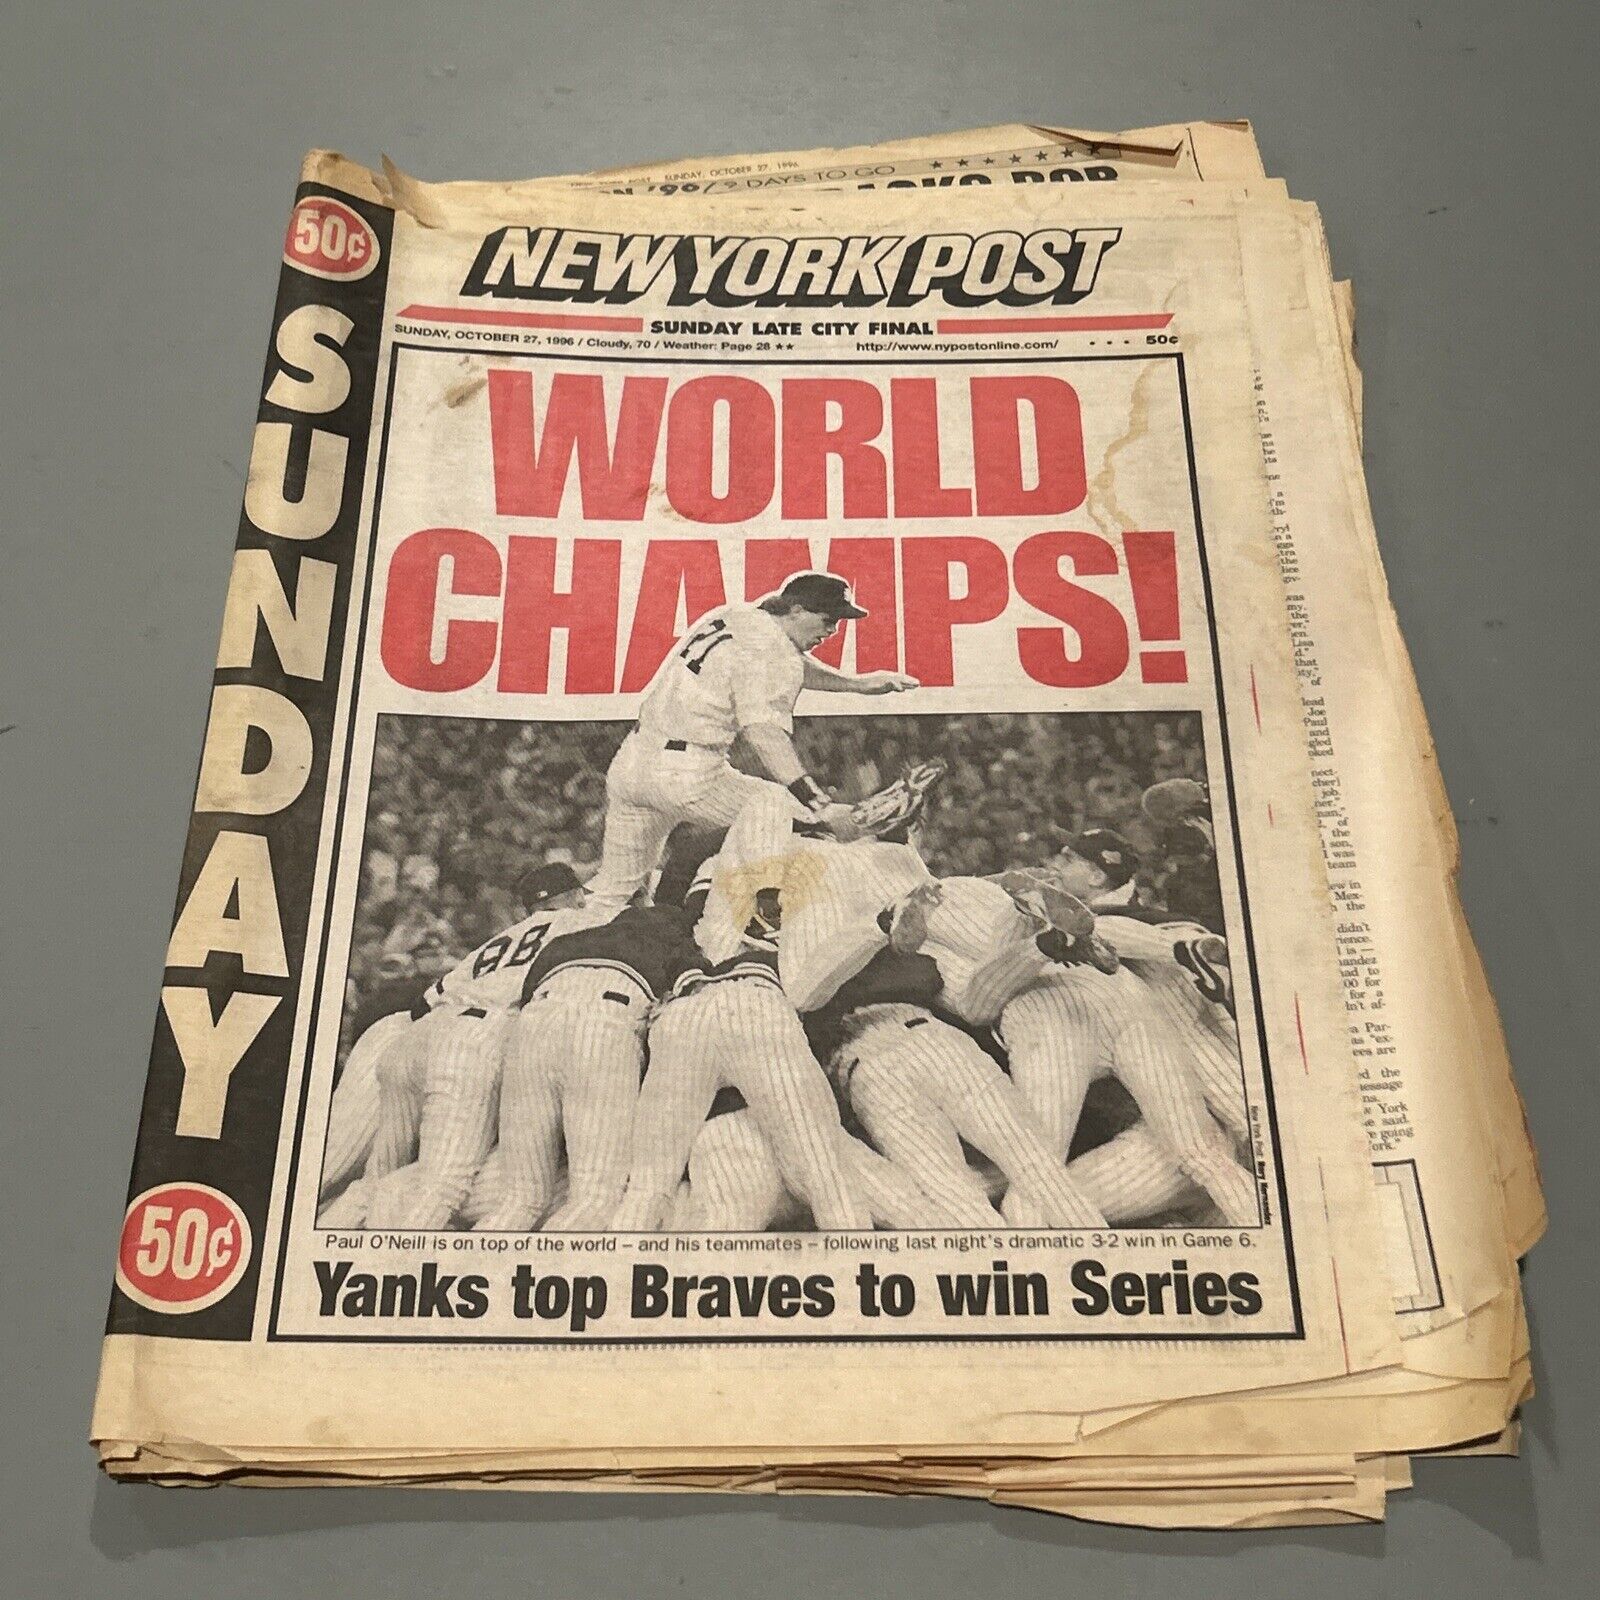 New York Post Yankees world series champions October 27, 1996 “World Champs”